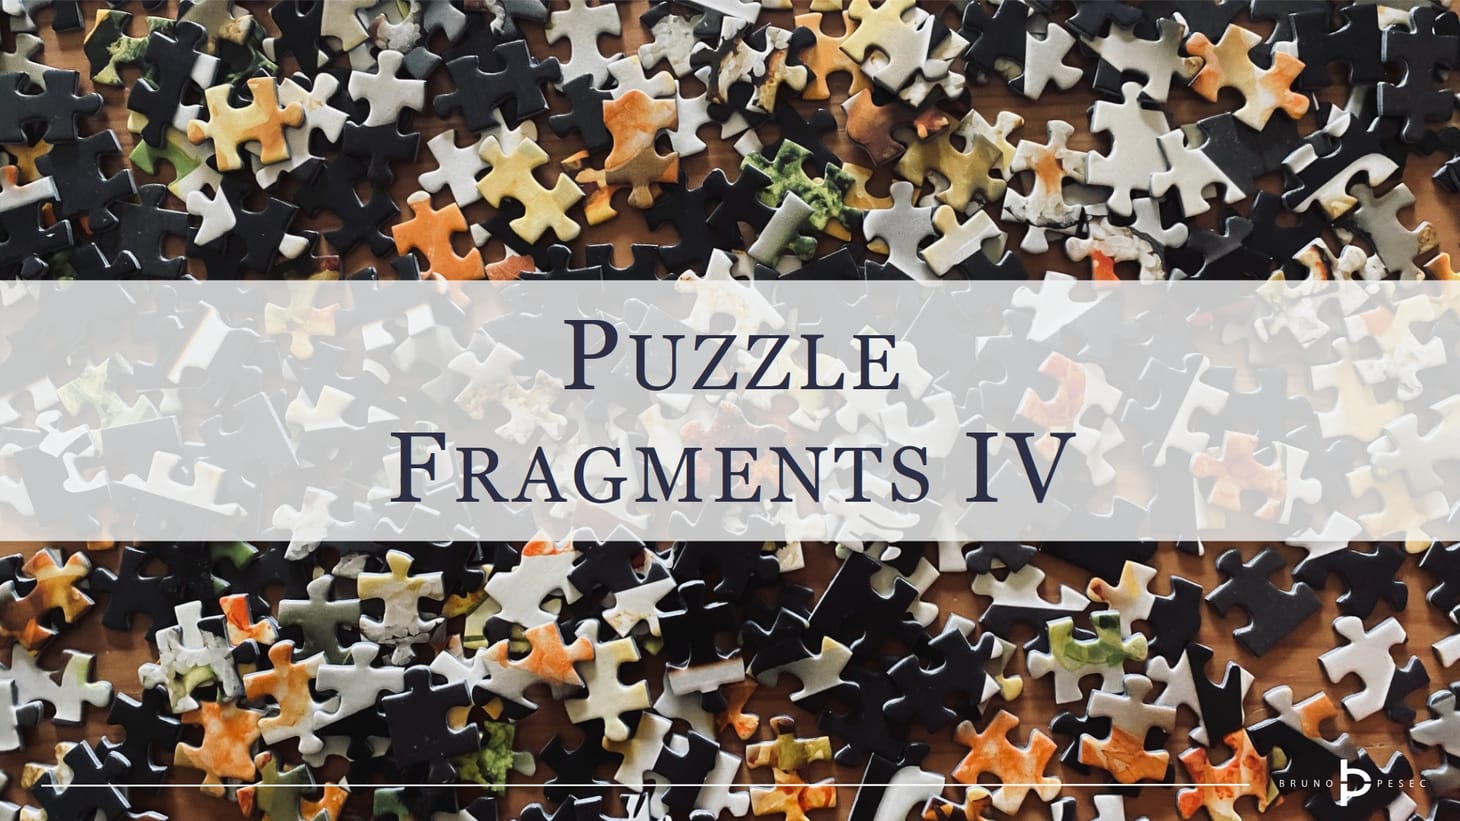 Puzzle fragments IV